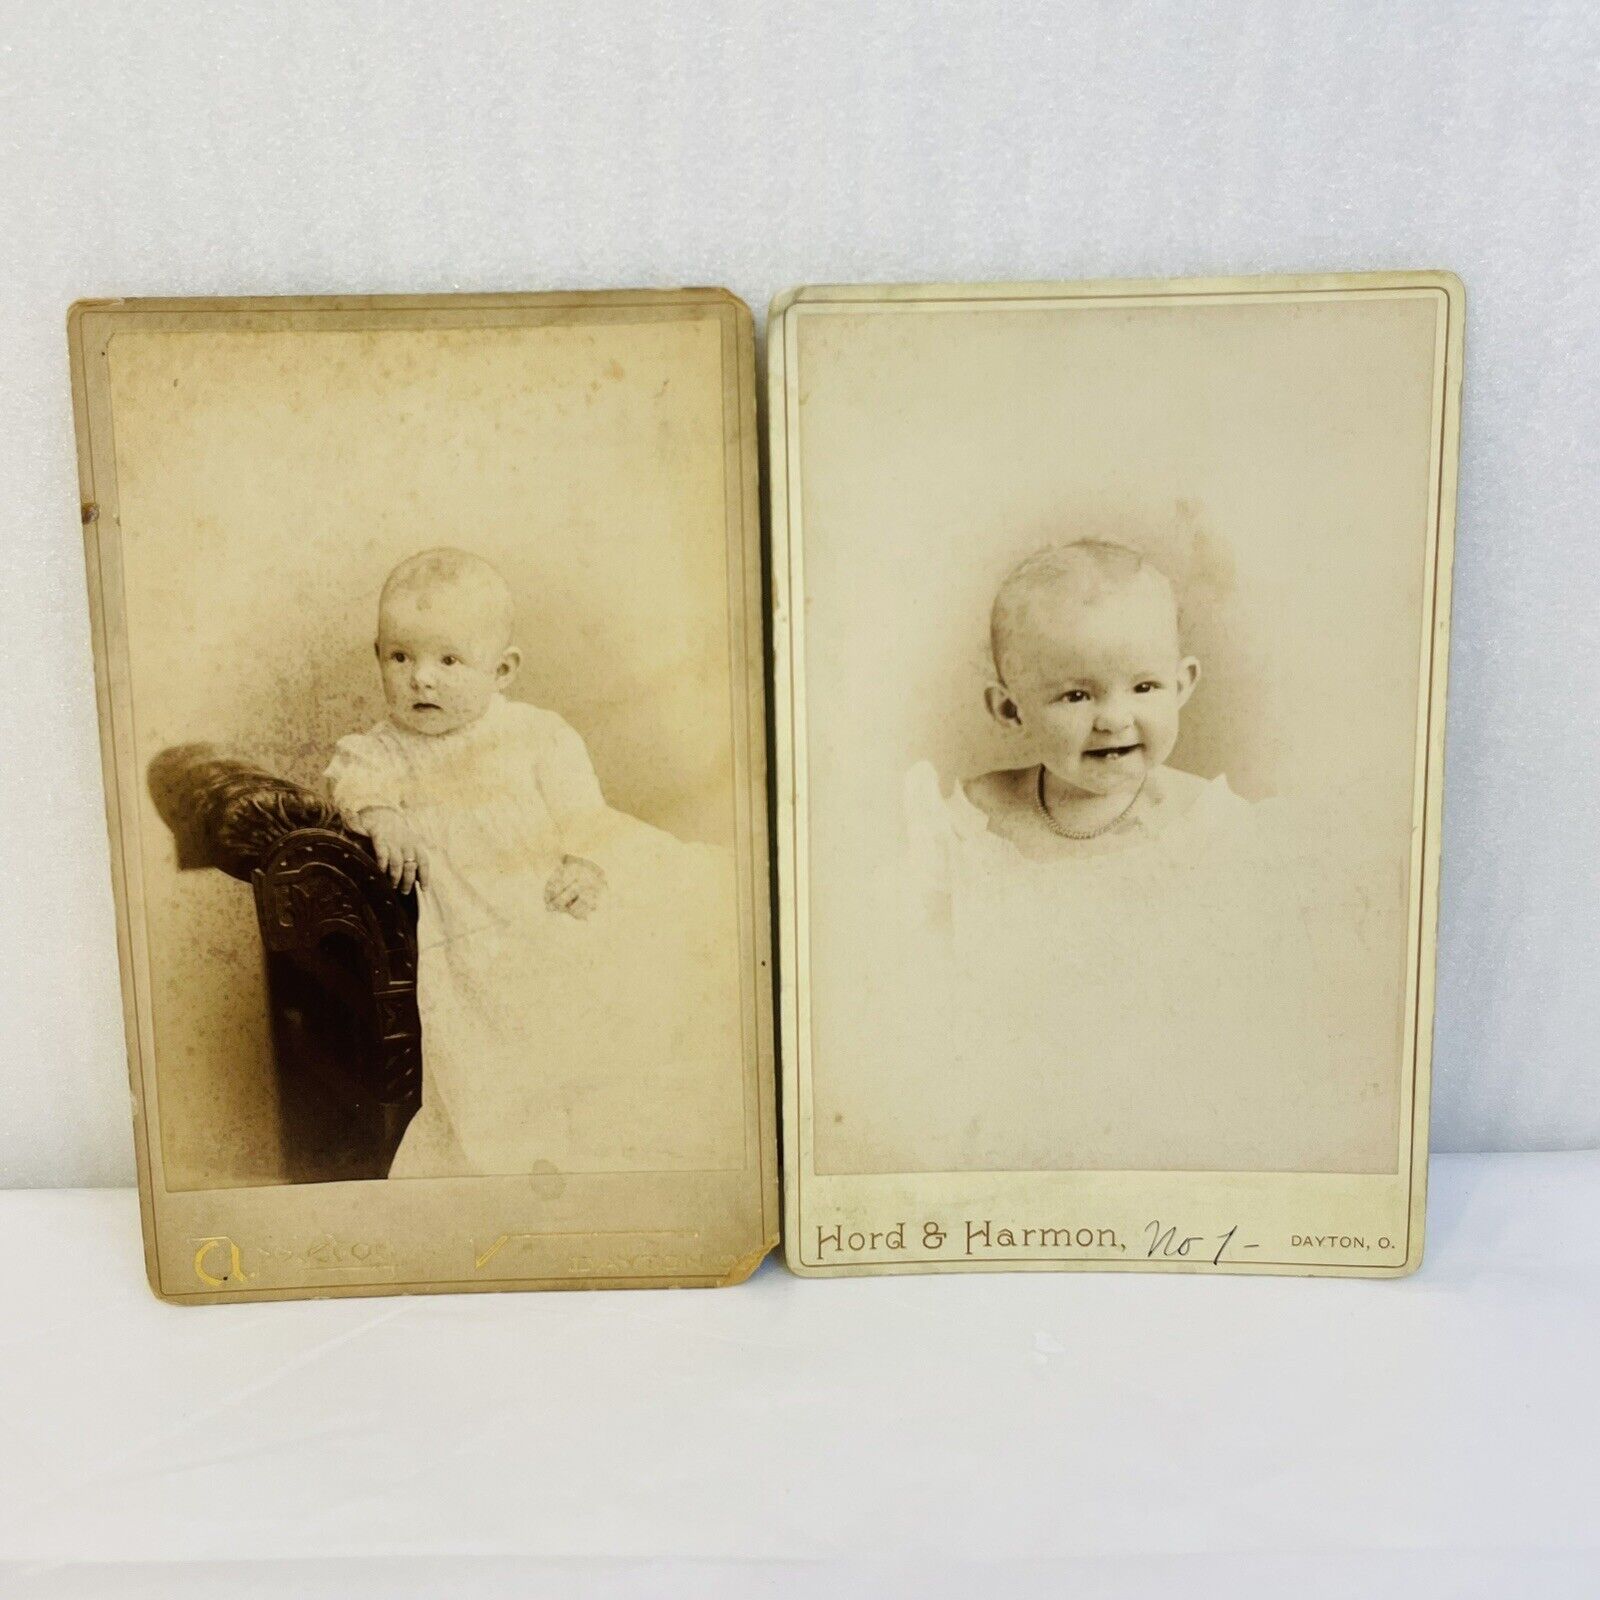 Two 19th C Antique Cabinet Cards Portrait Photographs Dayton Ohio Signed onBack